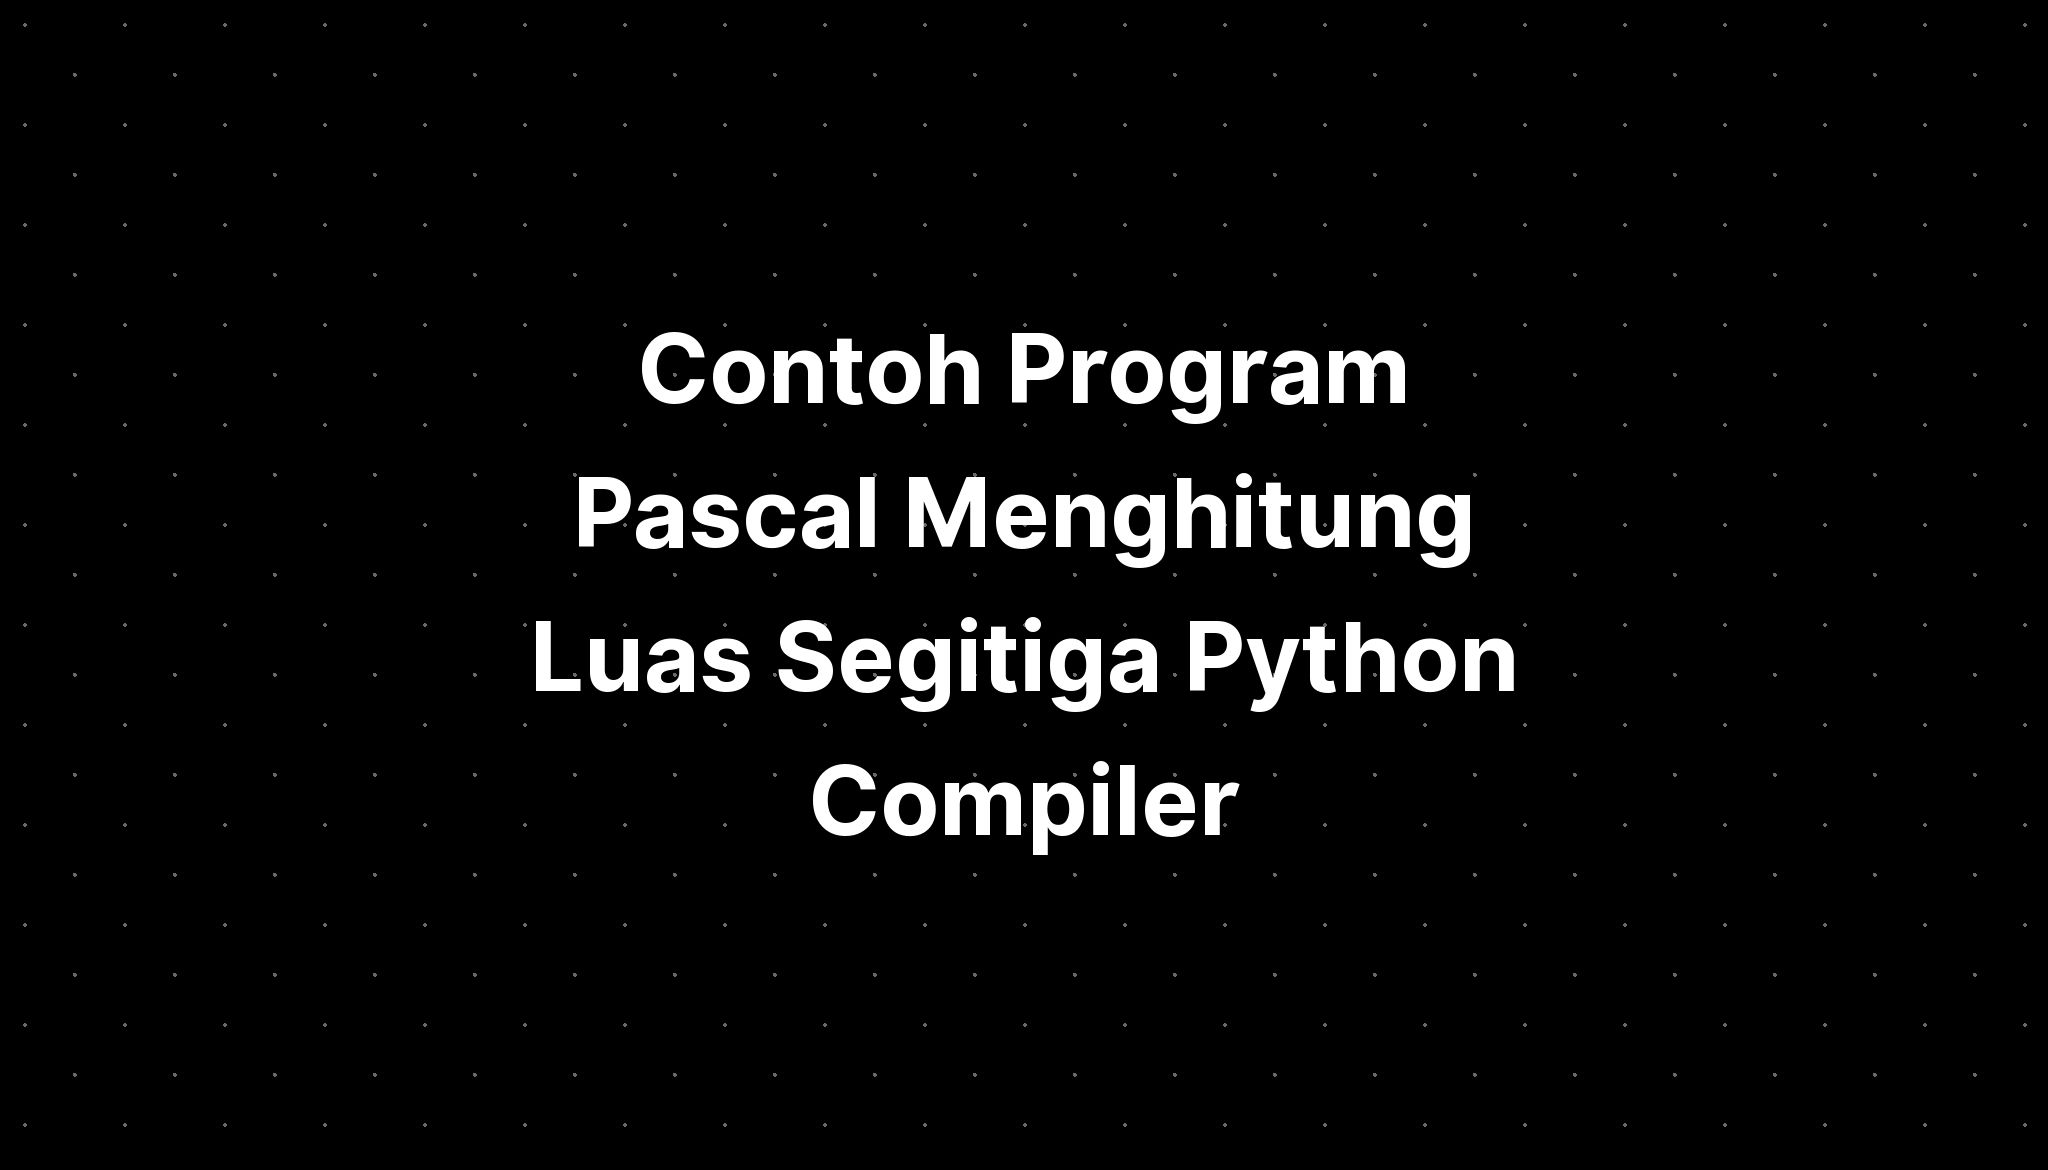 Contoh Program Pascal Menghitung Luas Segitiga Python Compiler Imagesee